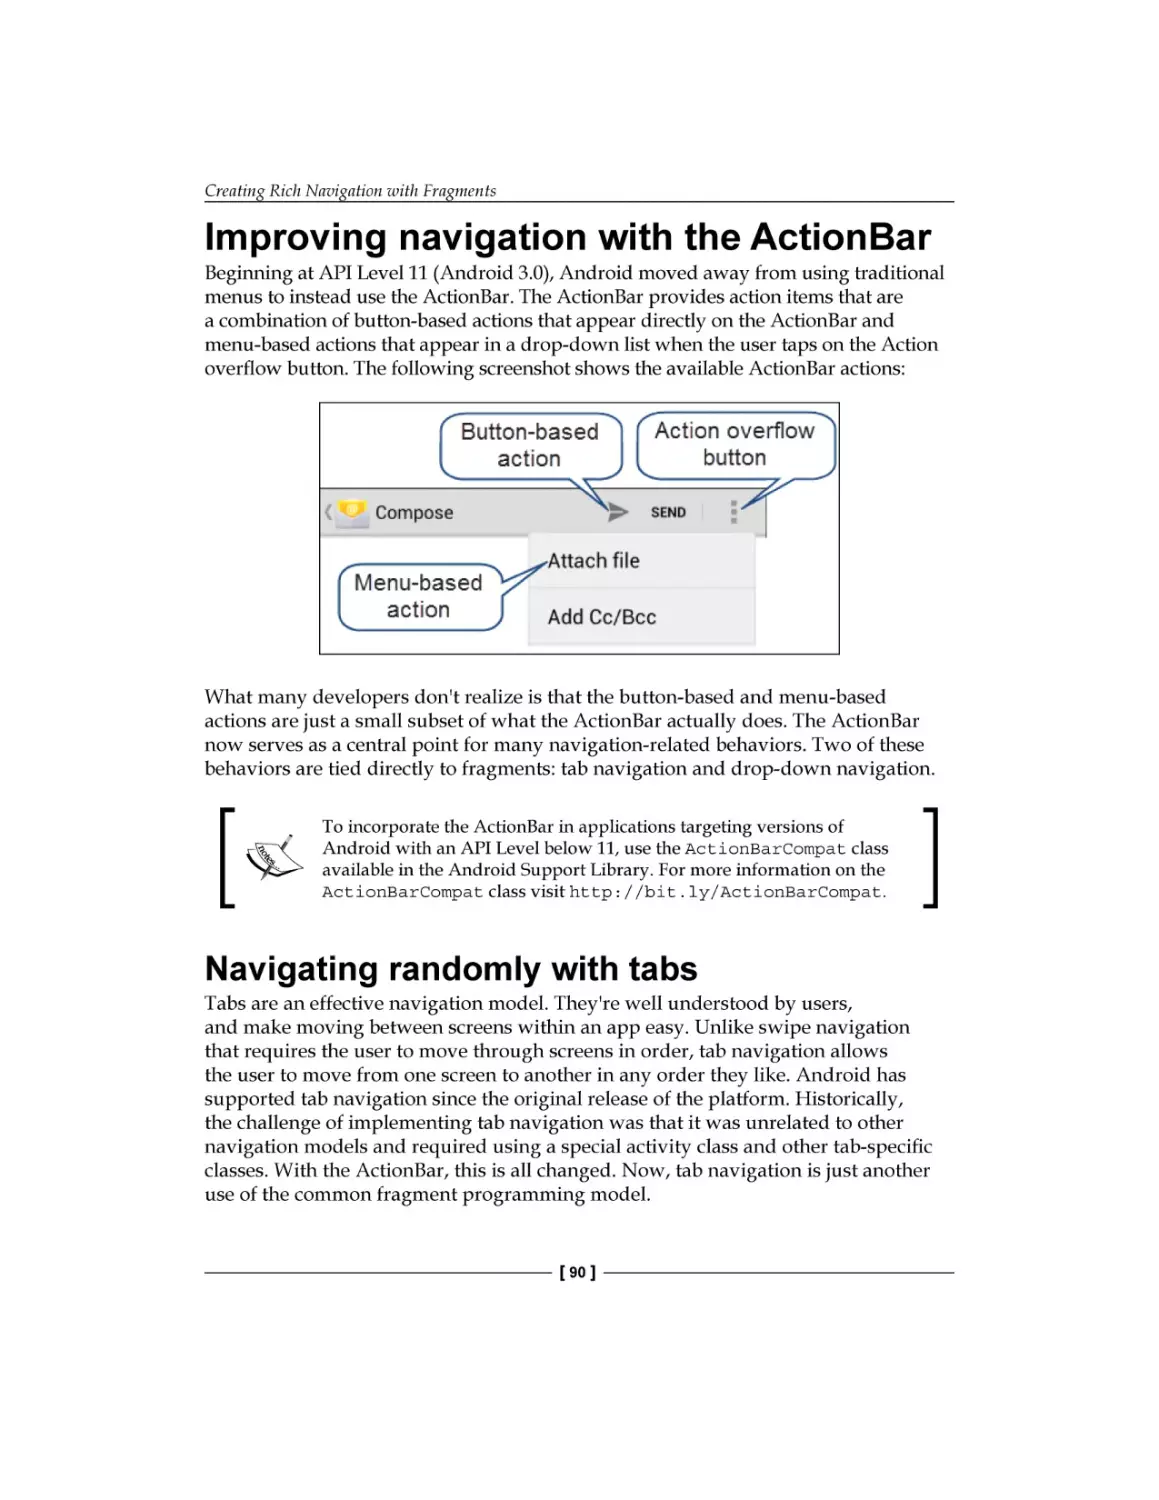 Improving navigation with the ActionBar
Navigating randomly with tabs